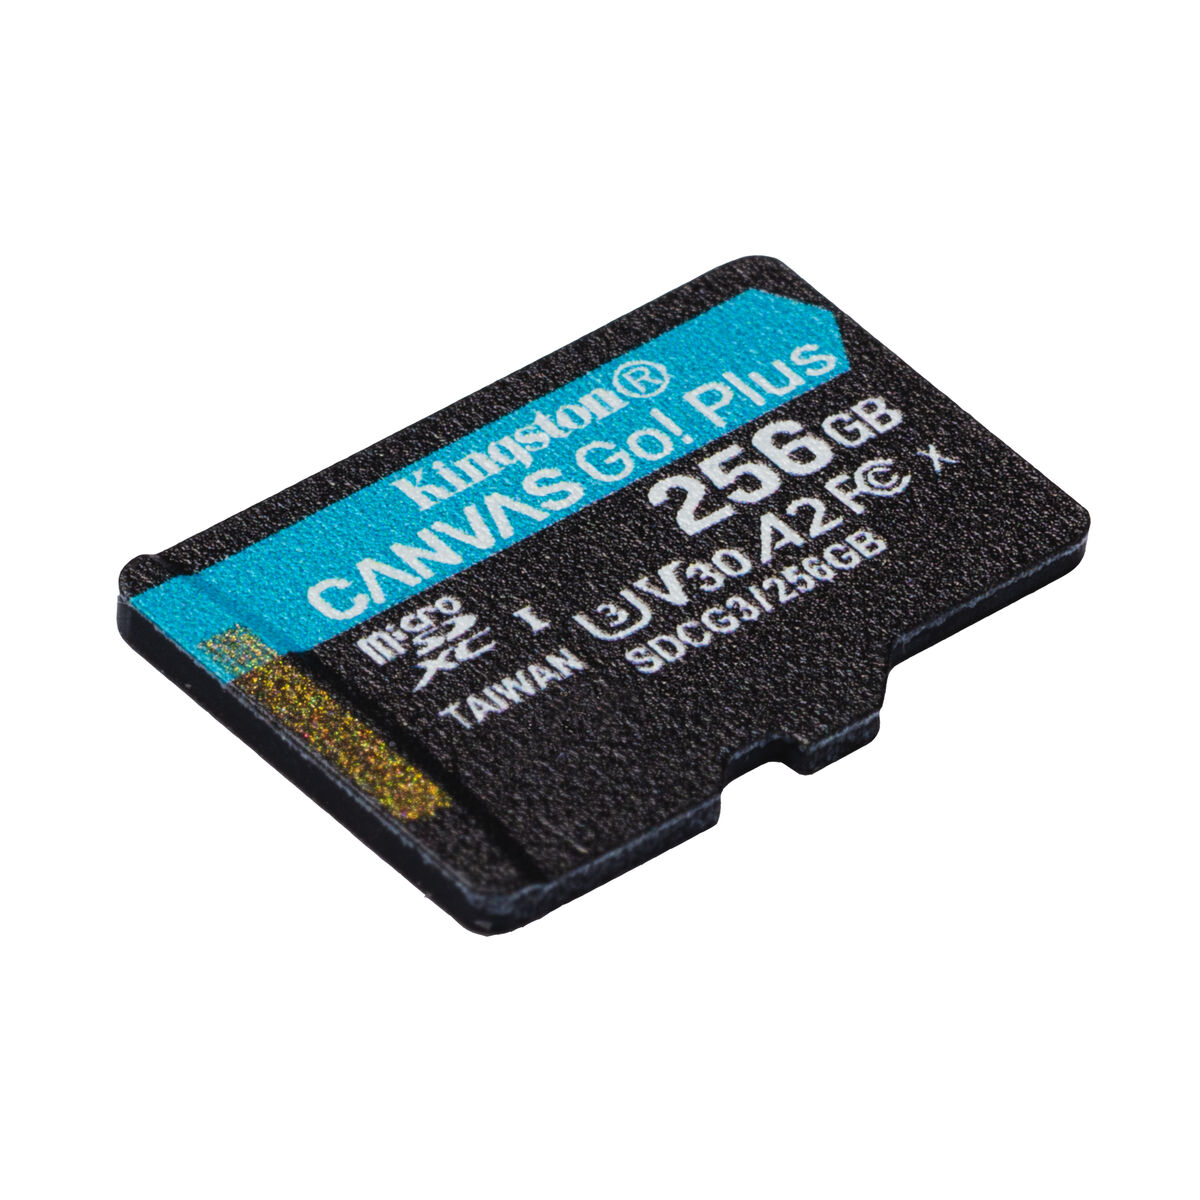 KINGSTON SDCG3/256GBSP, Micro-SD Speicherkarte, GB, 256 MB/s 170